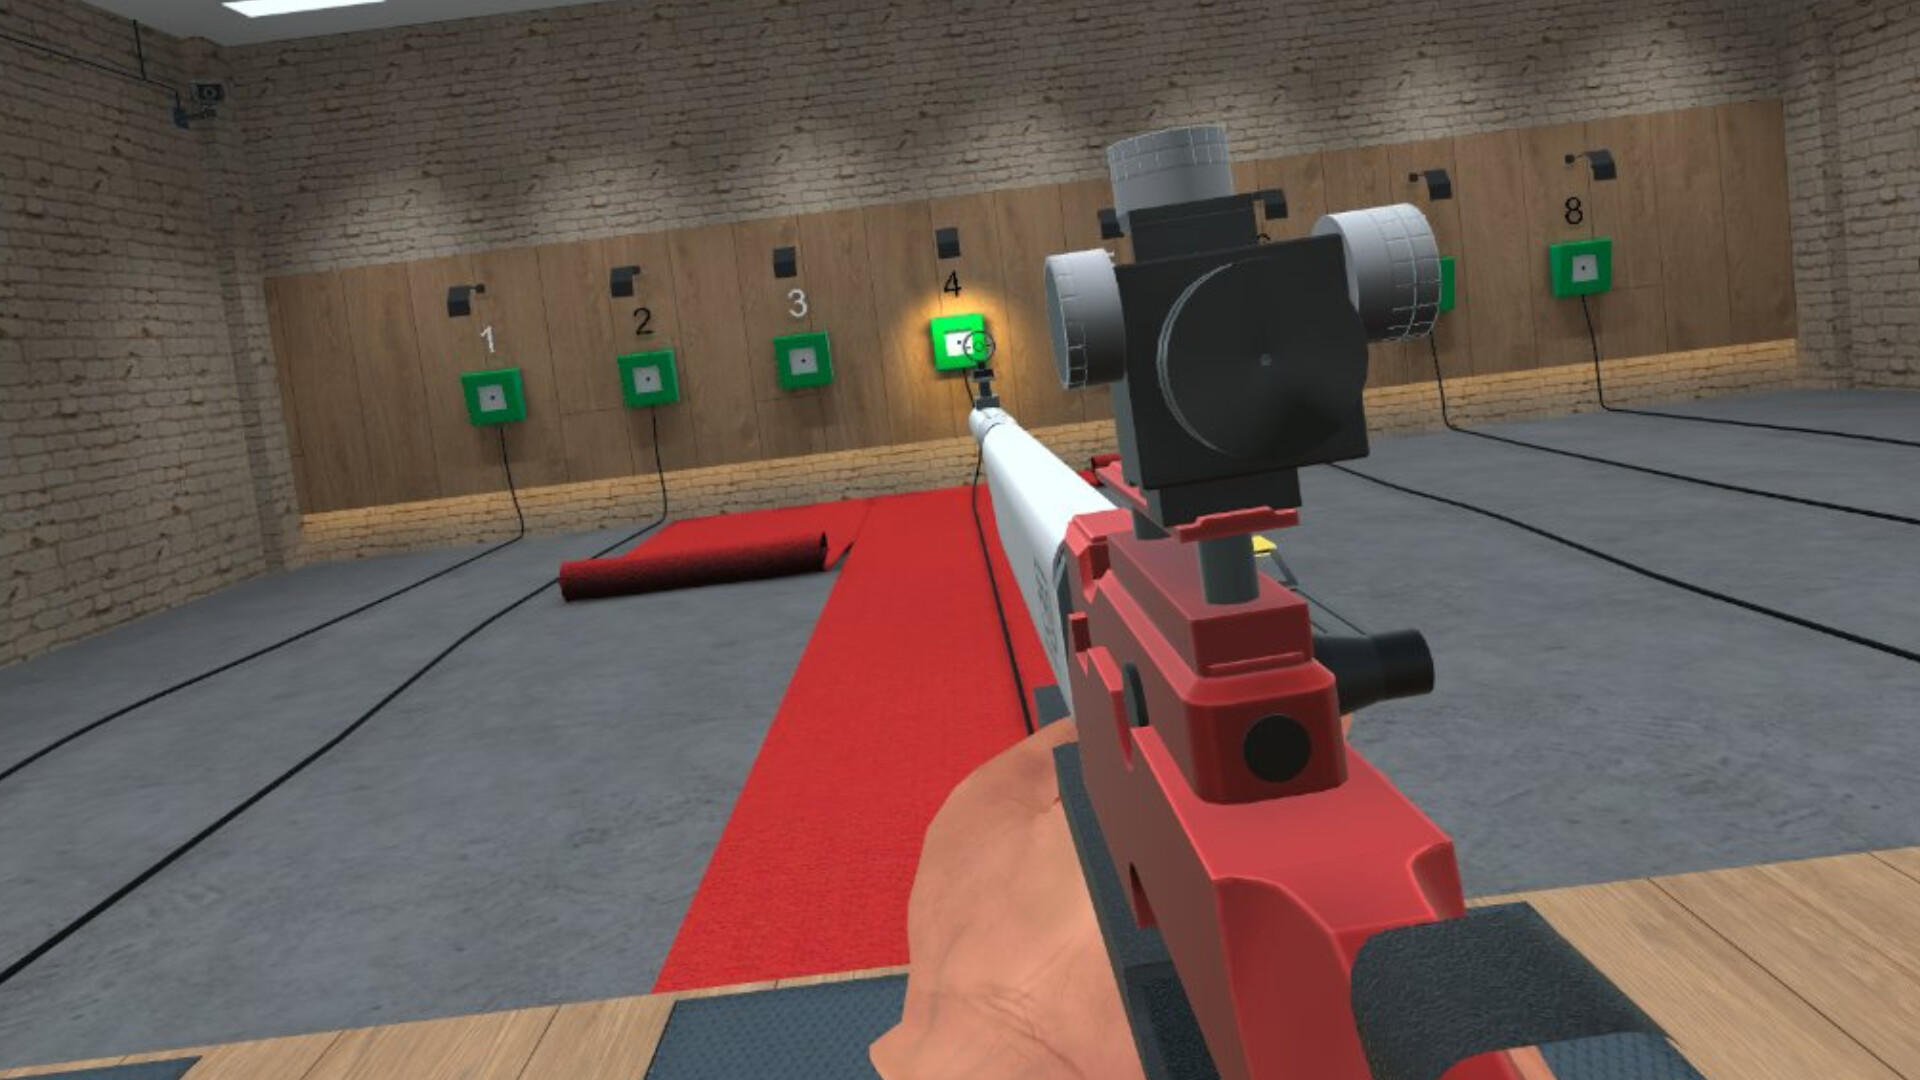 Screenshot of Pro Shooter VR